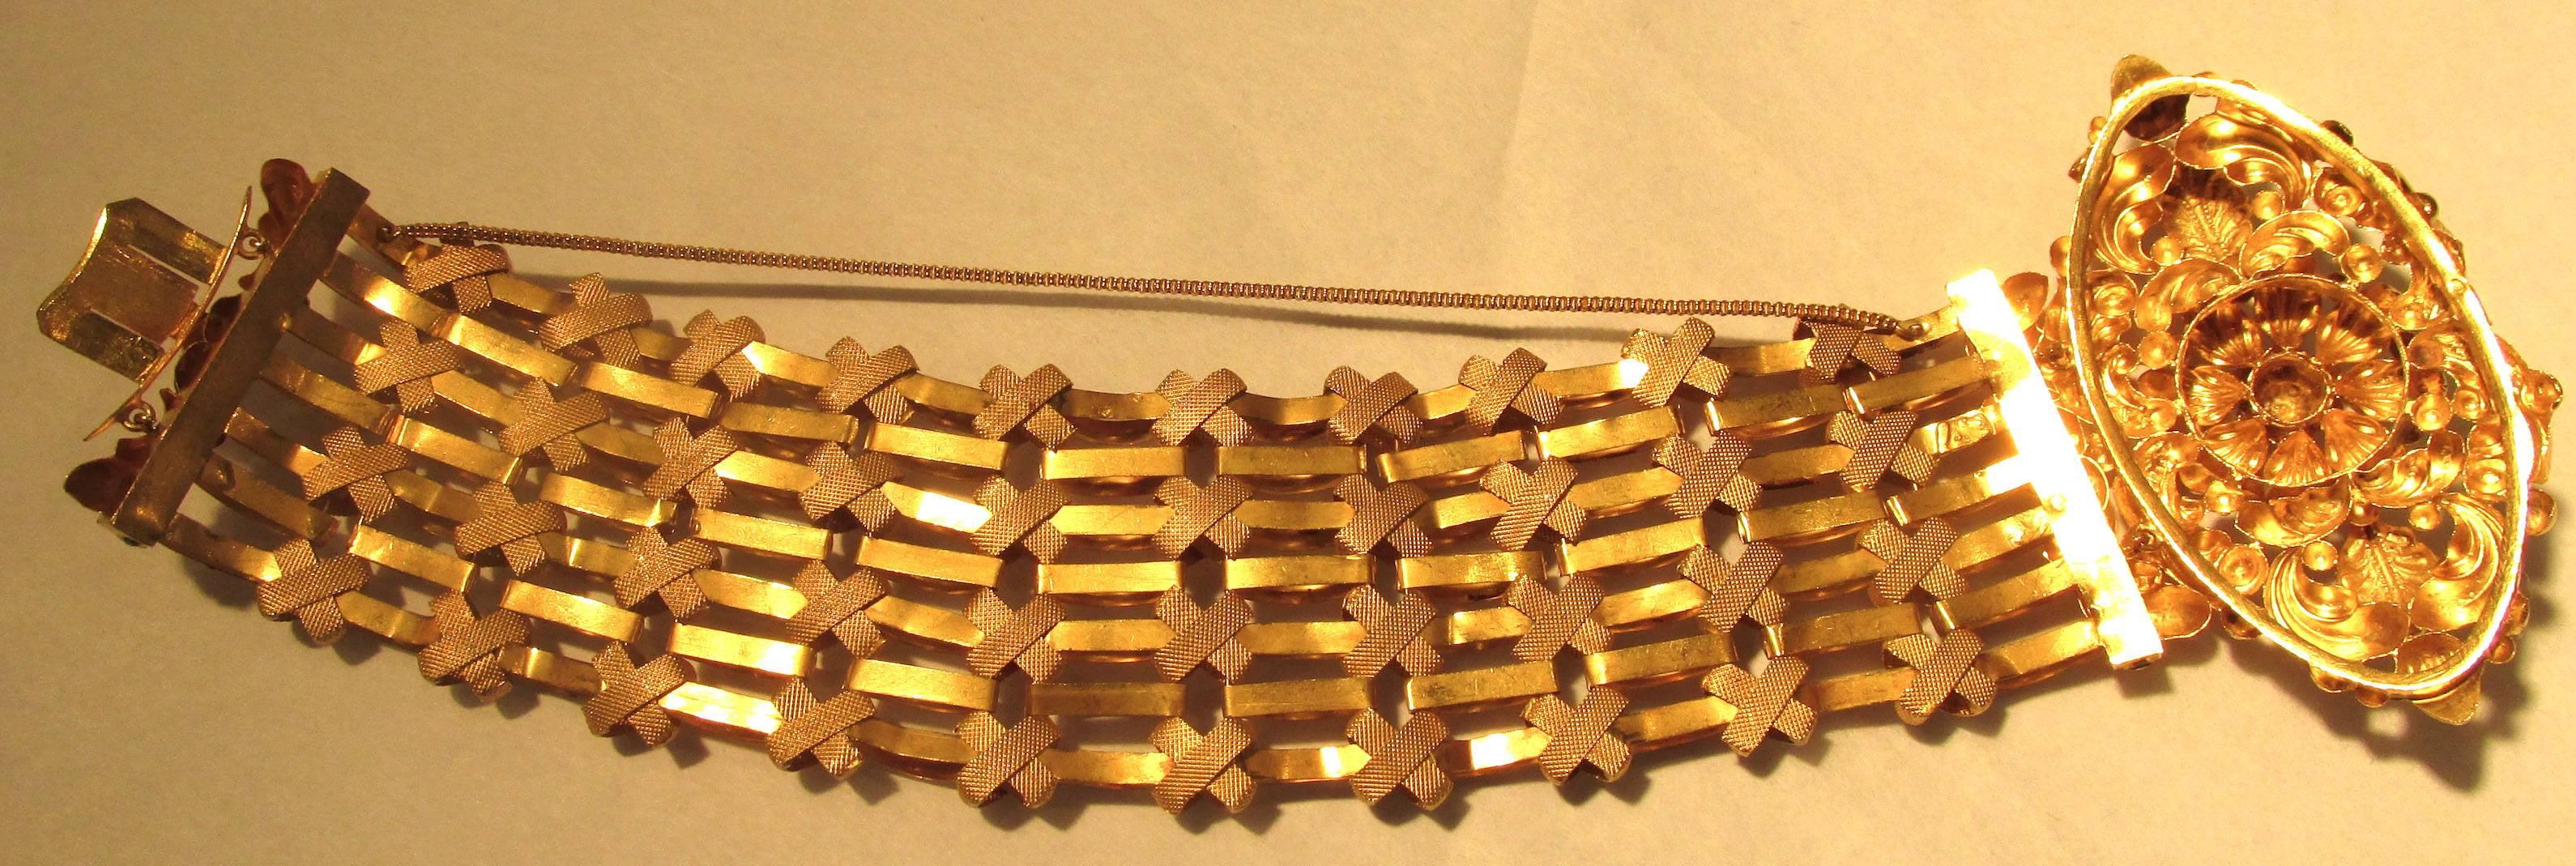 Antique French 18K Gold Cuff Bracelet, c1800bv For Sale 5